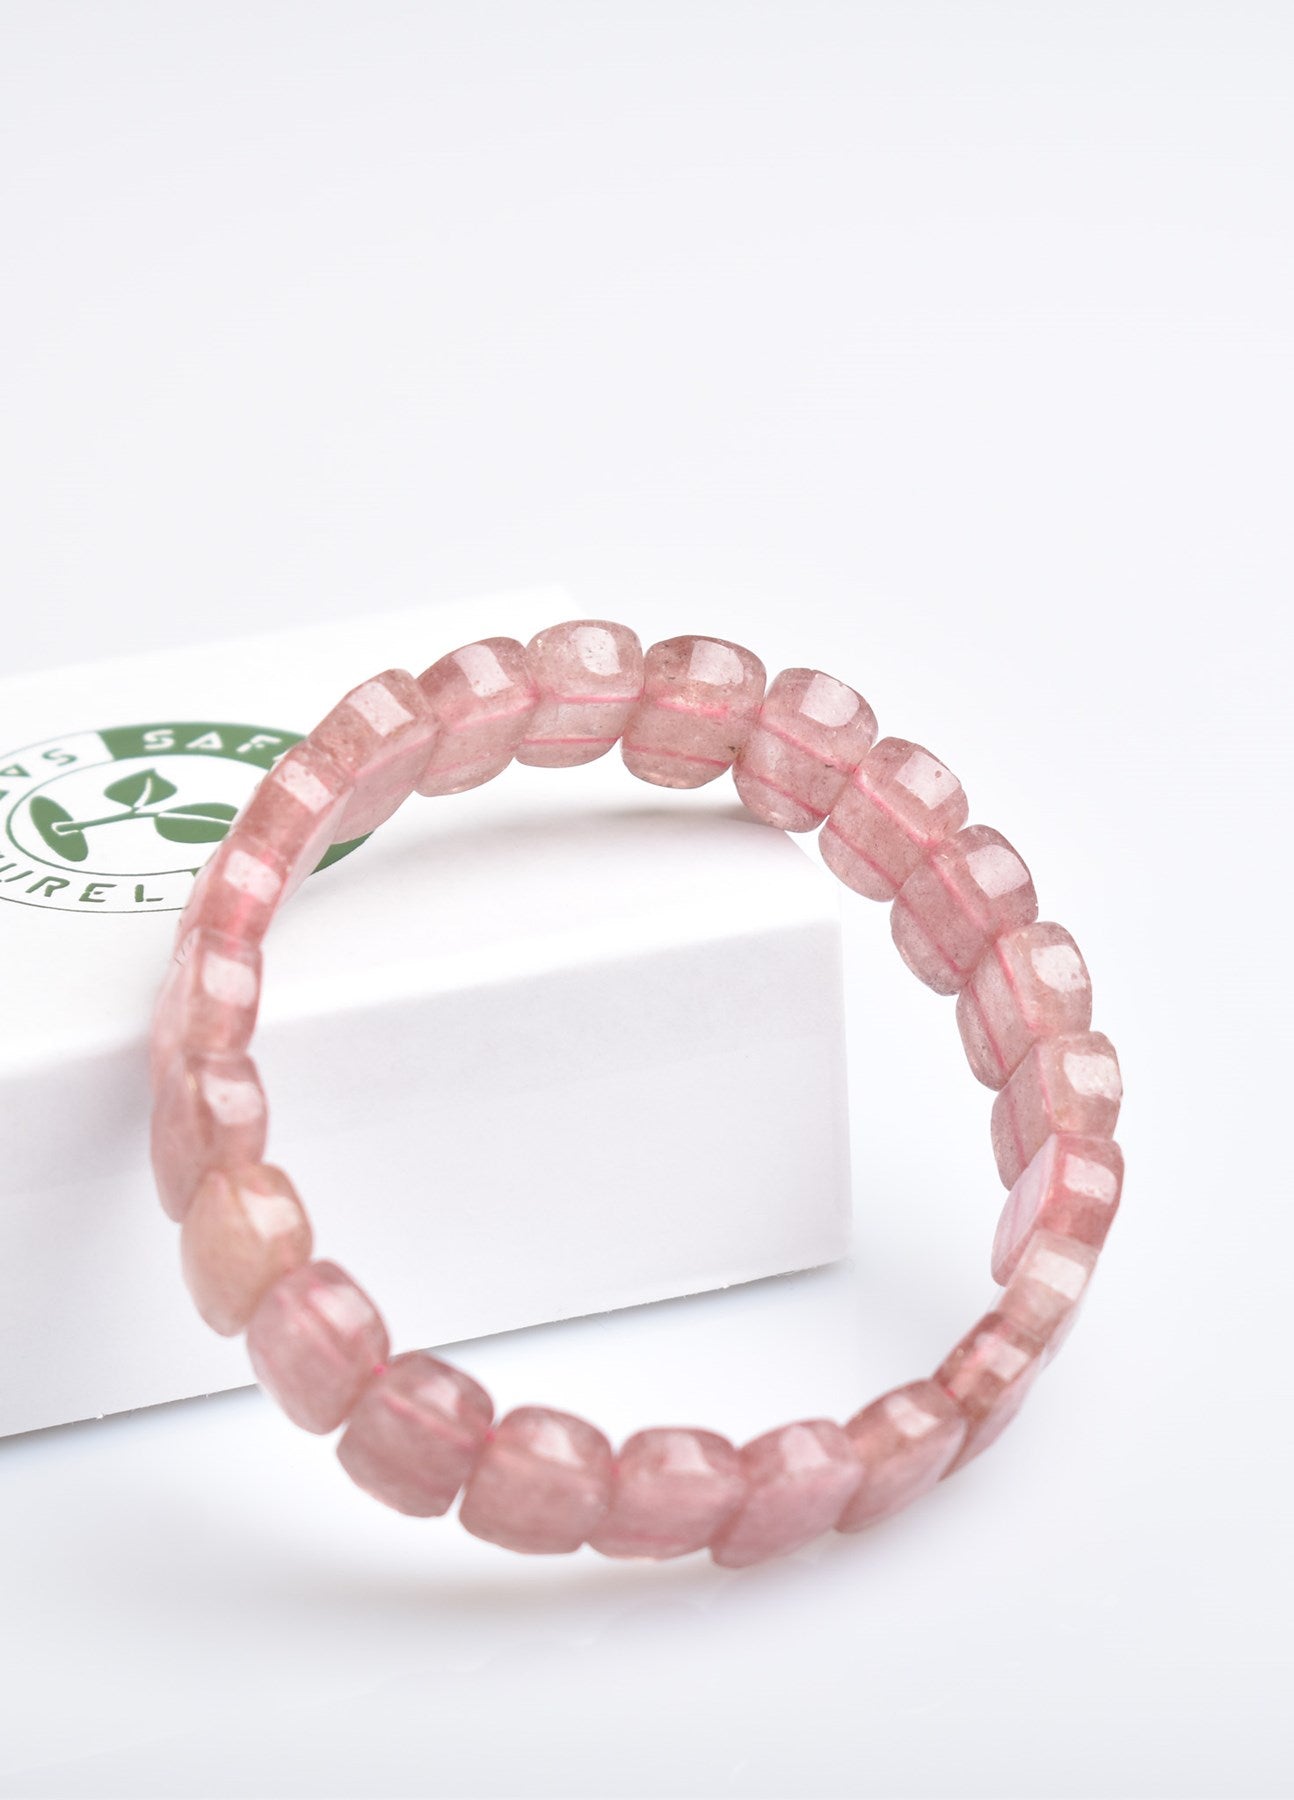 Strawberry Quartz Natural Gemstone Bracelet 9x14mm Rectangle Cut